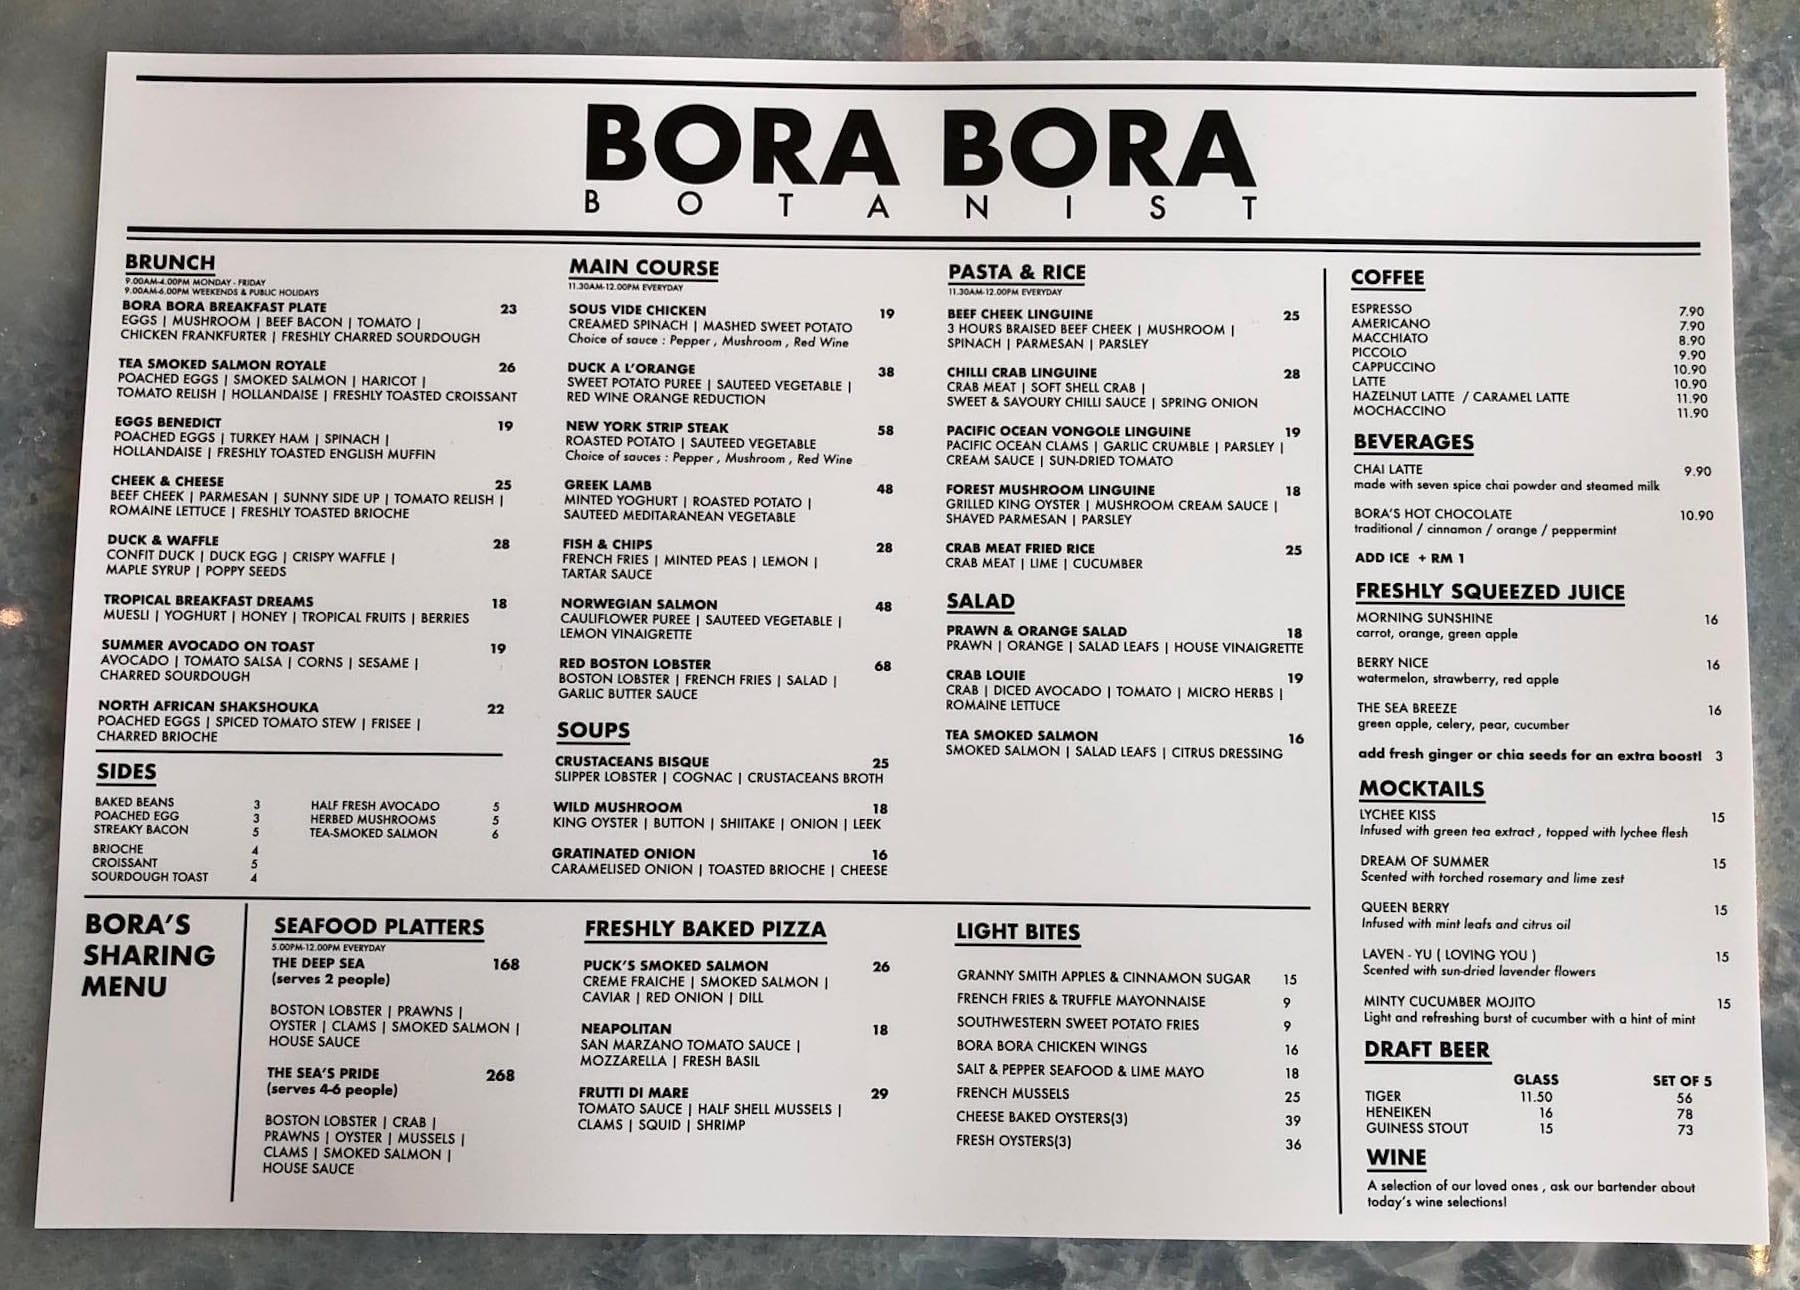 Bora Bora Botanist 1